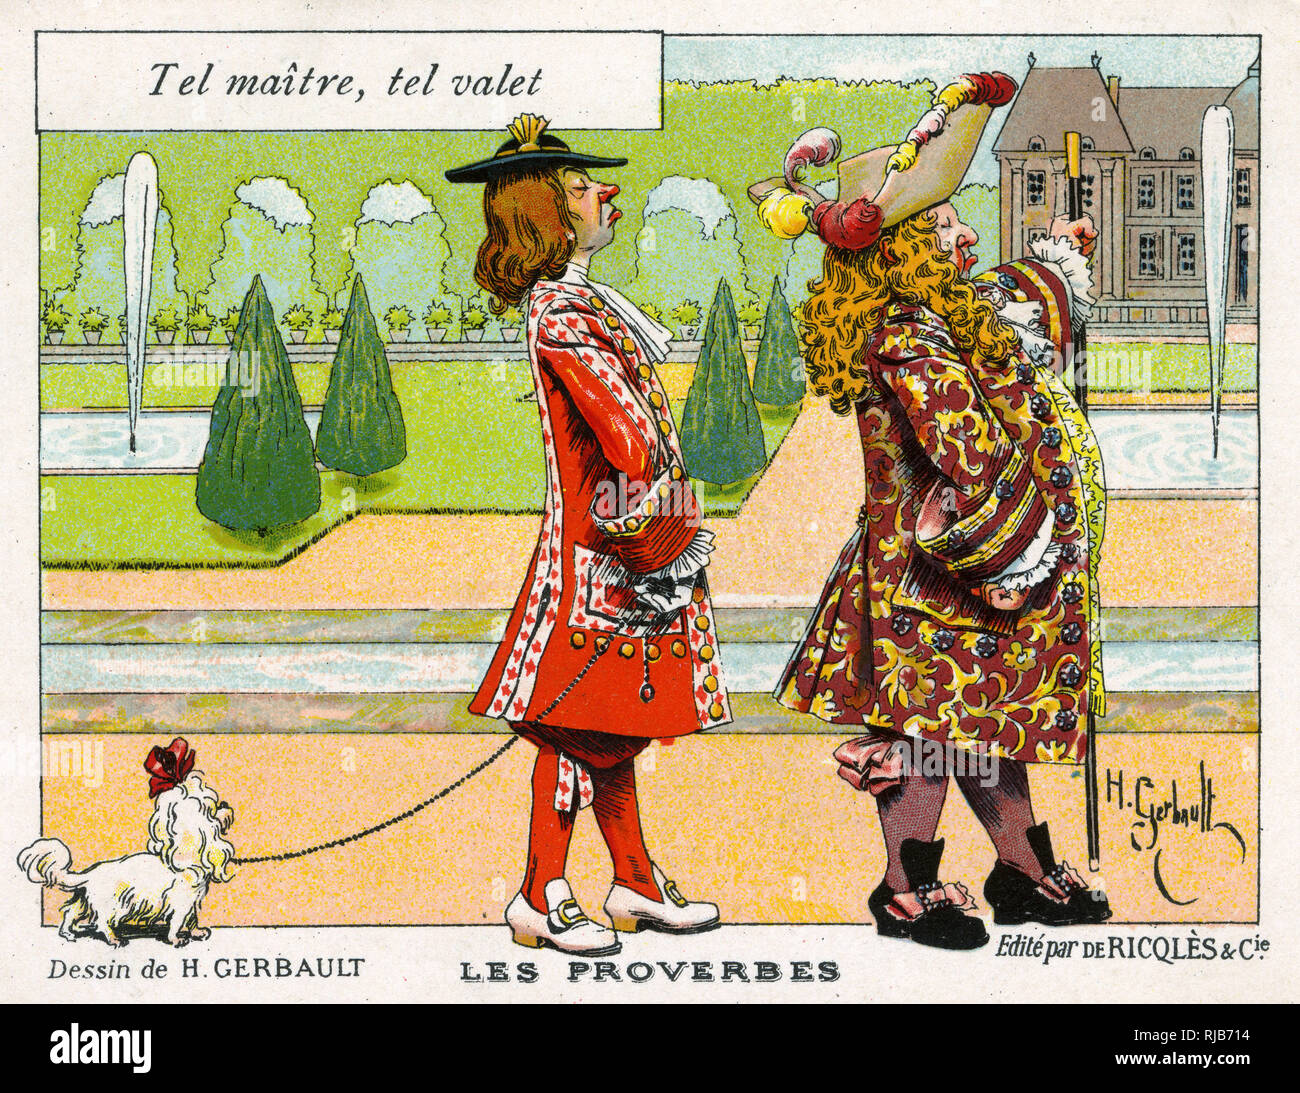 Proverbe belge - Tel maître, tel Valet (man/serviteur Photo Stock - Alamy